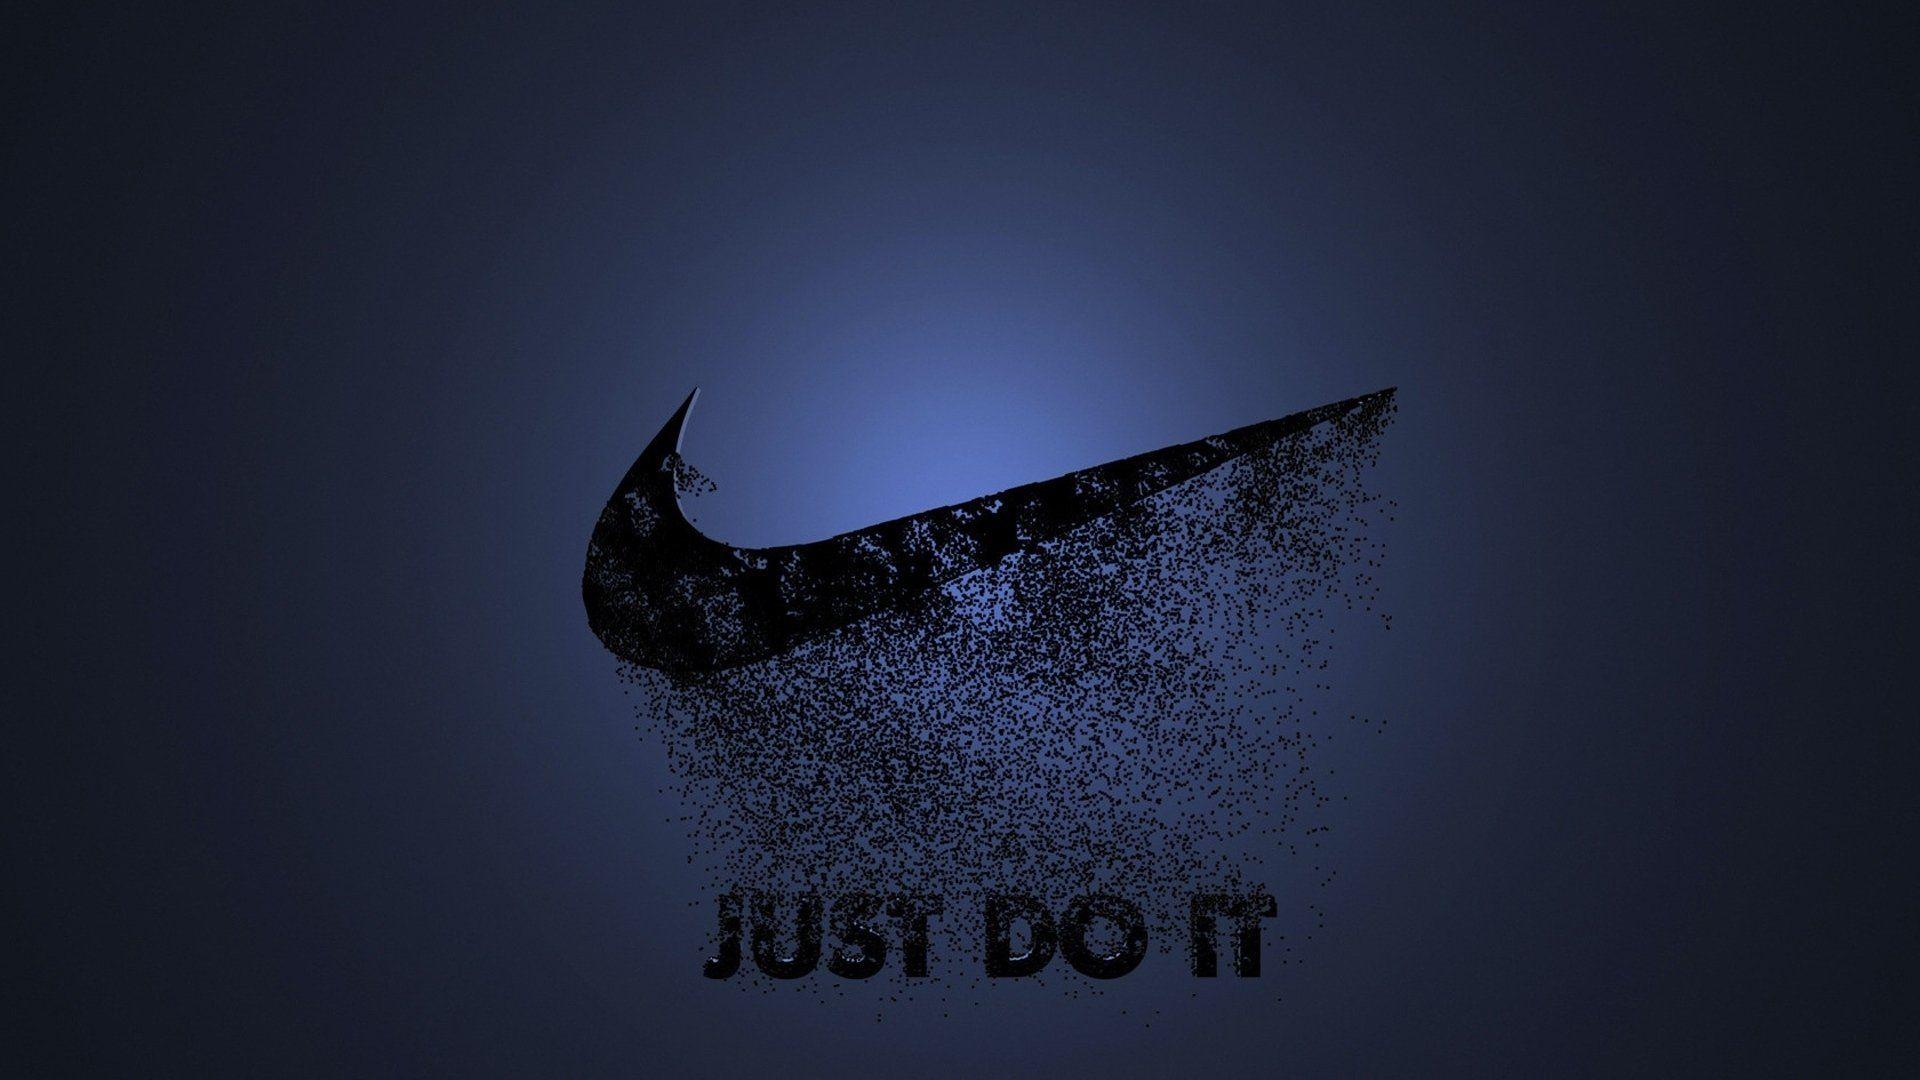 Cool Nike Wallpaper for iPhone, Pc Background, Nike Logo, Slogan